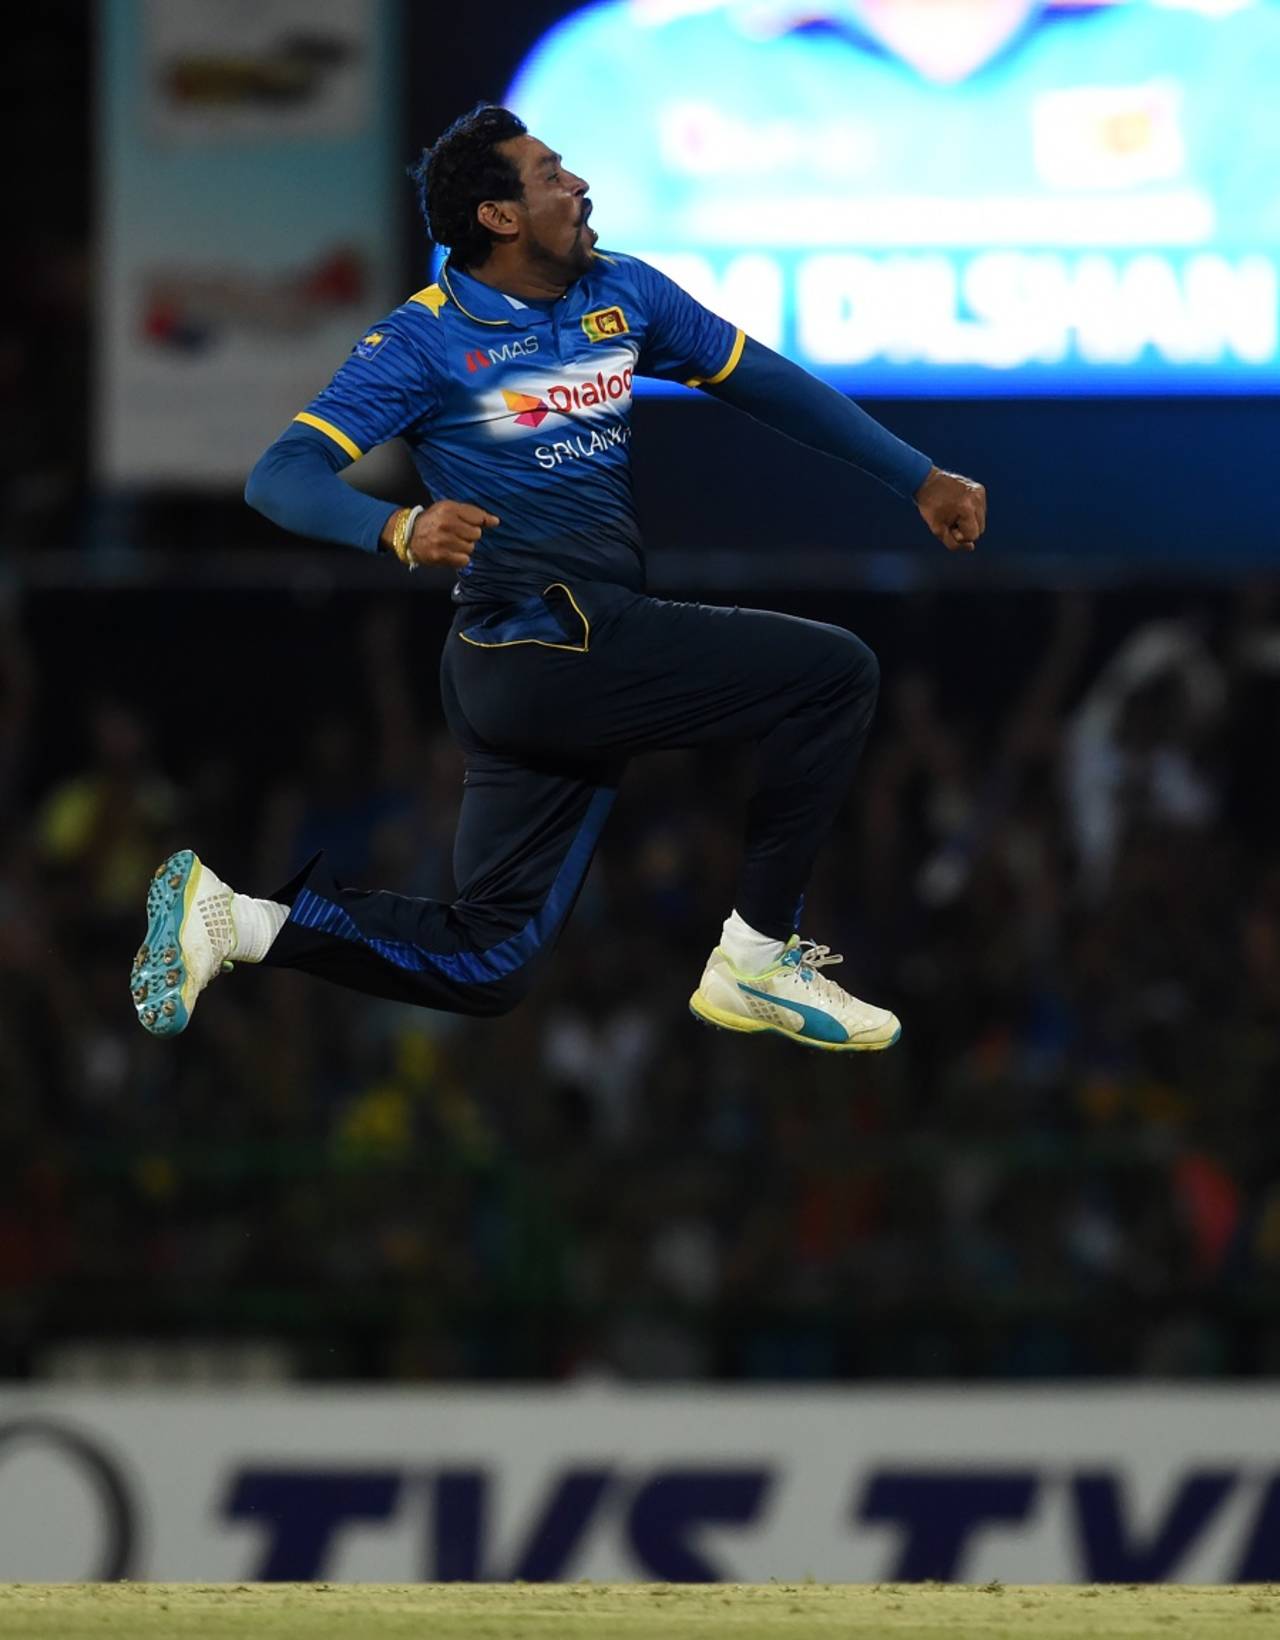 Tillakaratne Dilshan ended his international career with a wicket off his last ball&nbsp;&nbsp;&bull;&nbsp;&nbsp;AFP